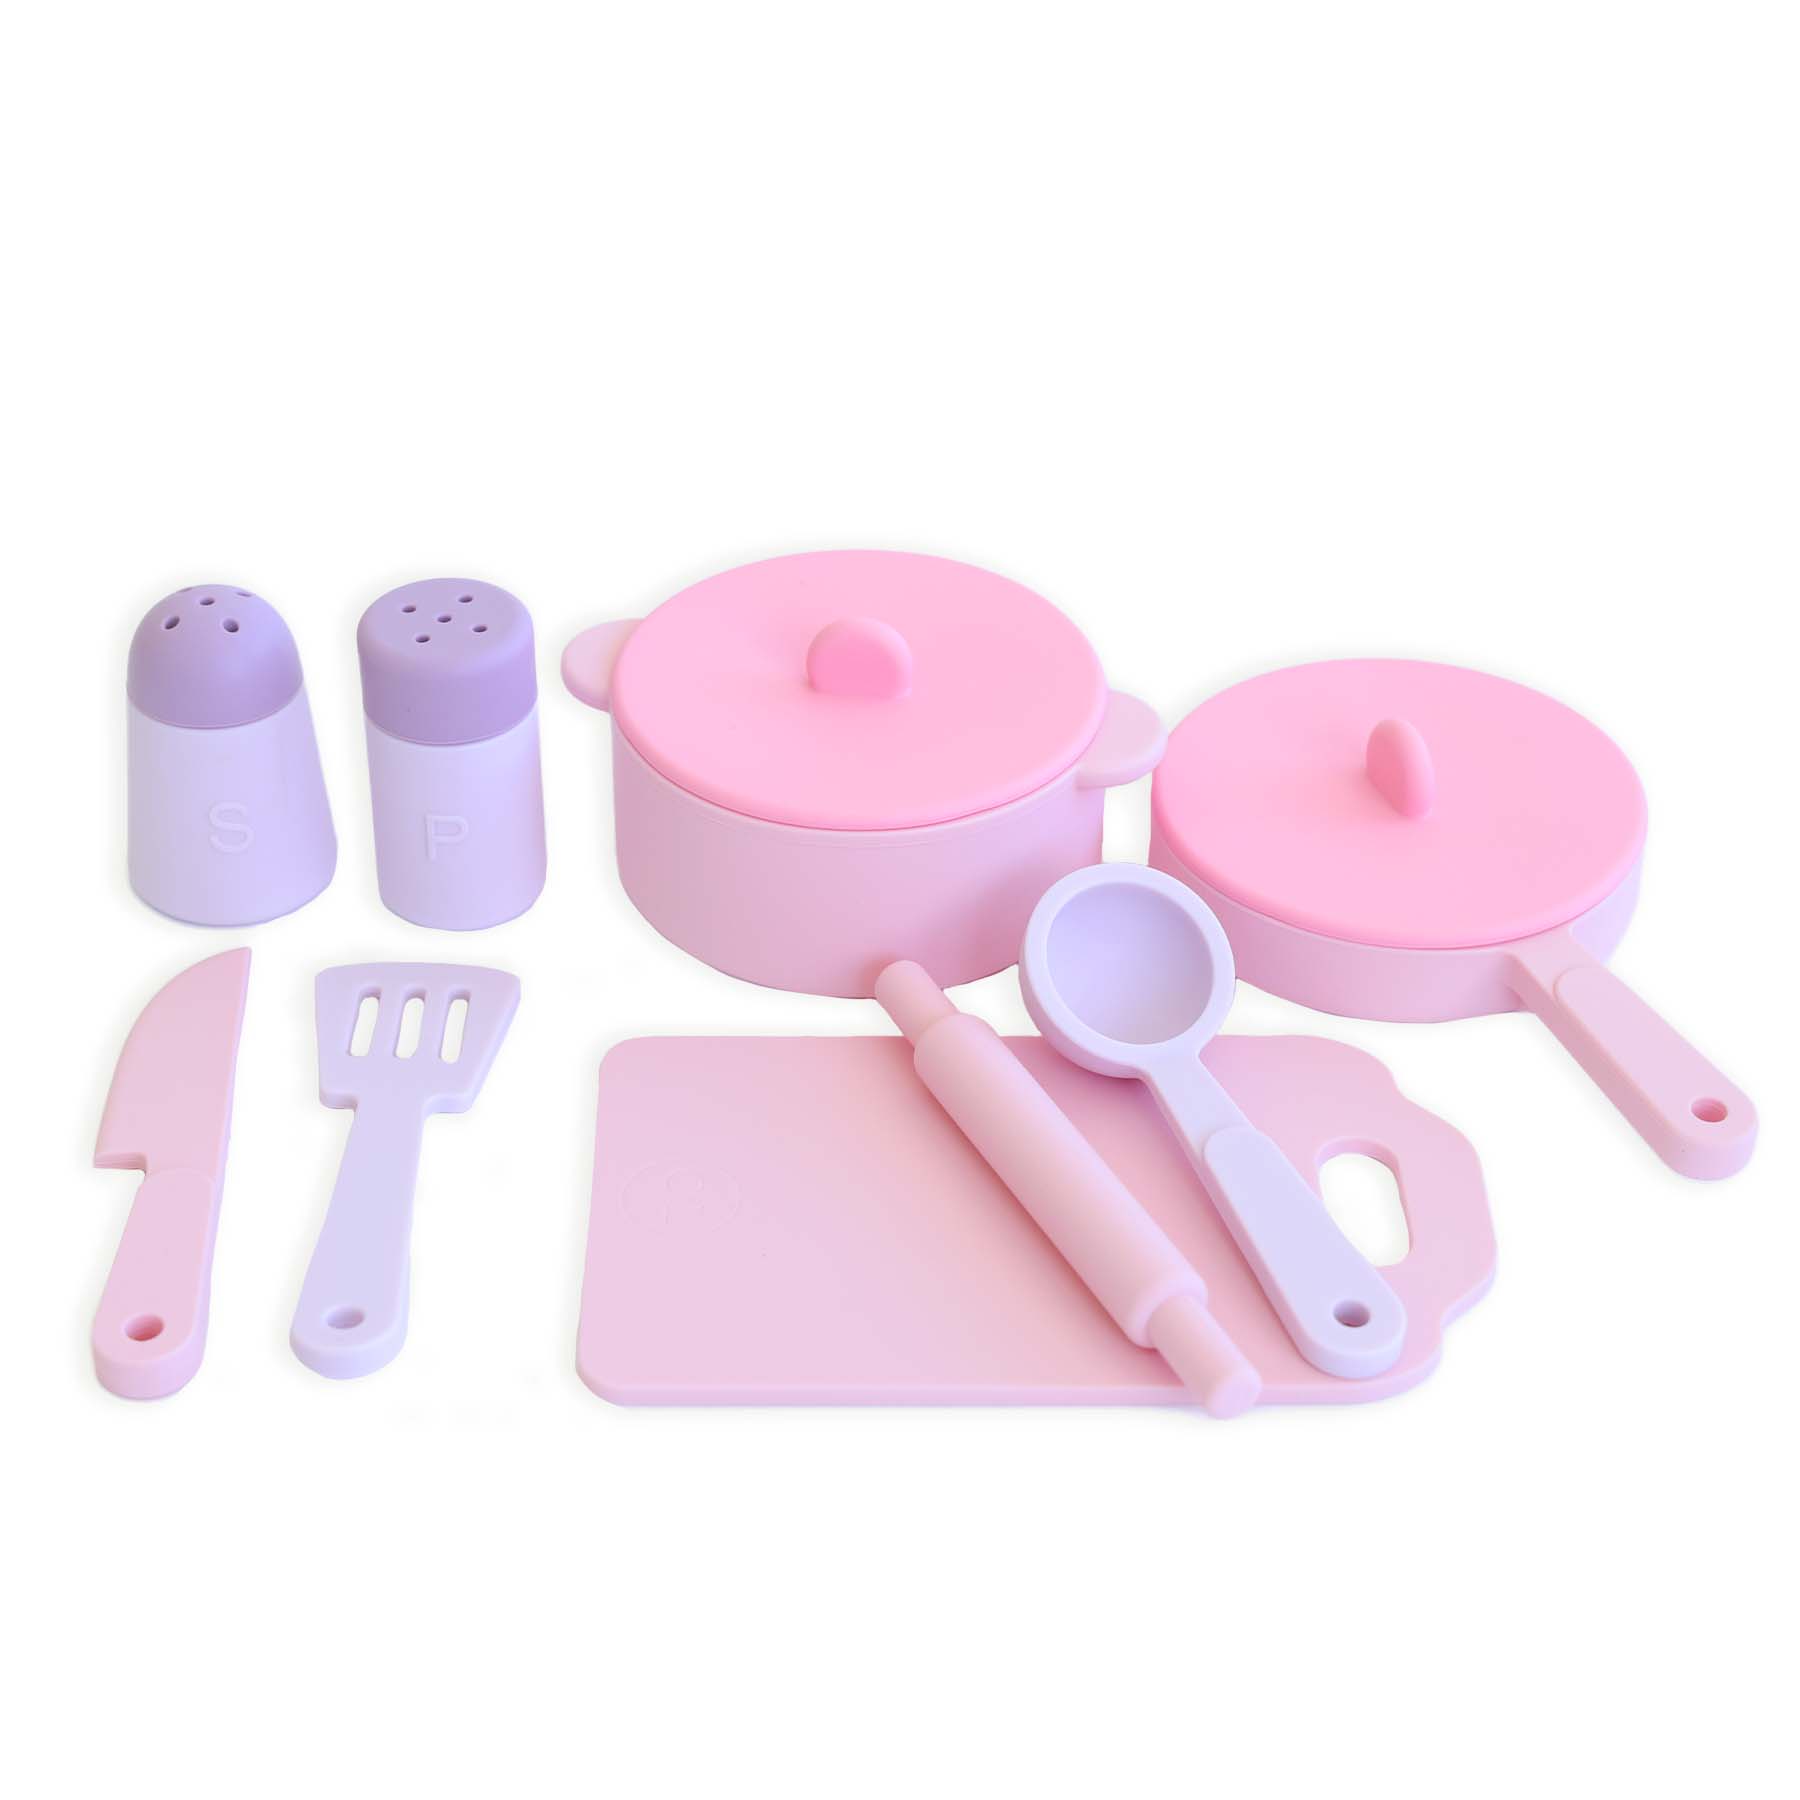 Image of Silicone Play Kitchen Set | Bubblegum